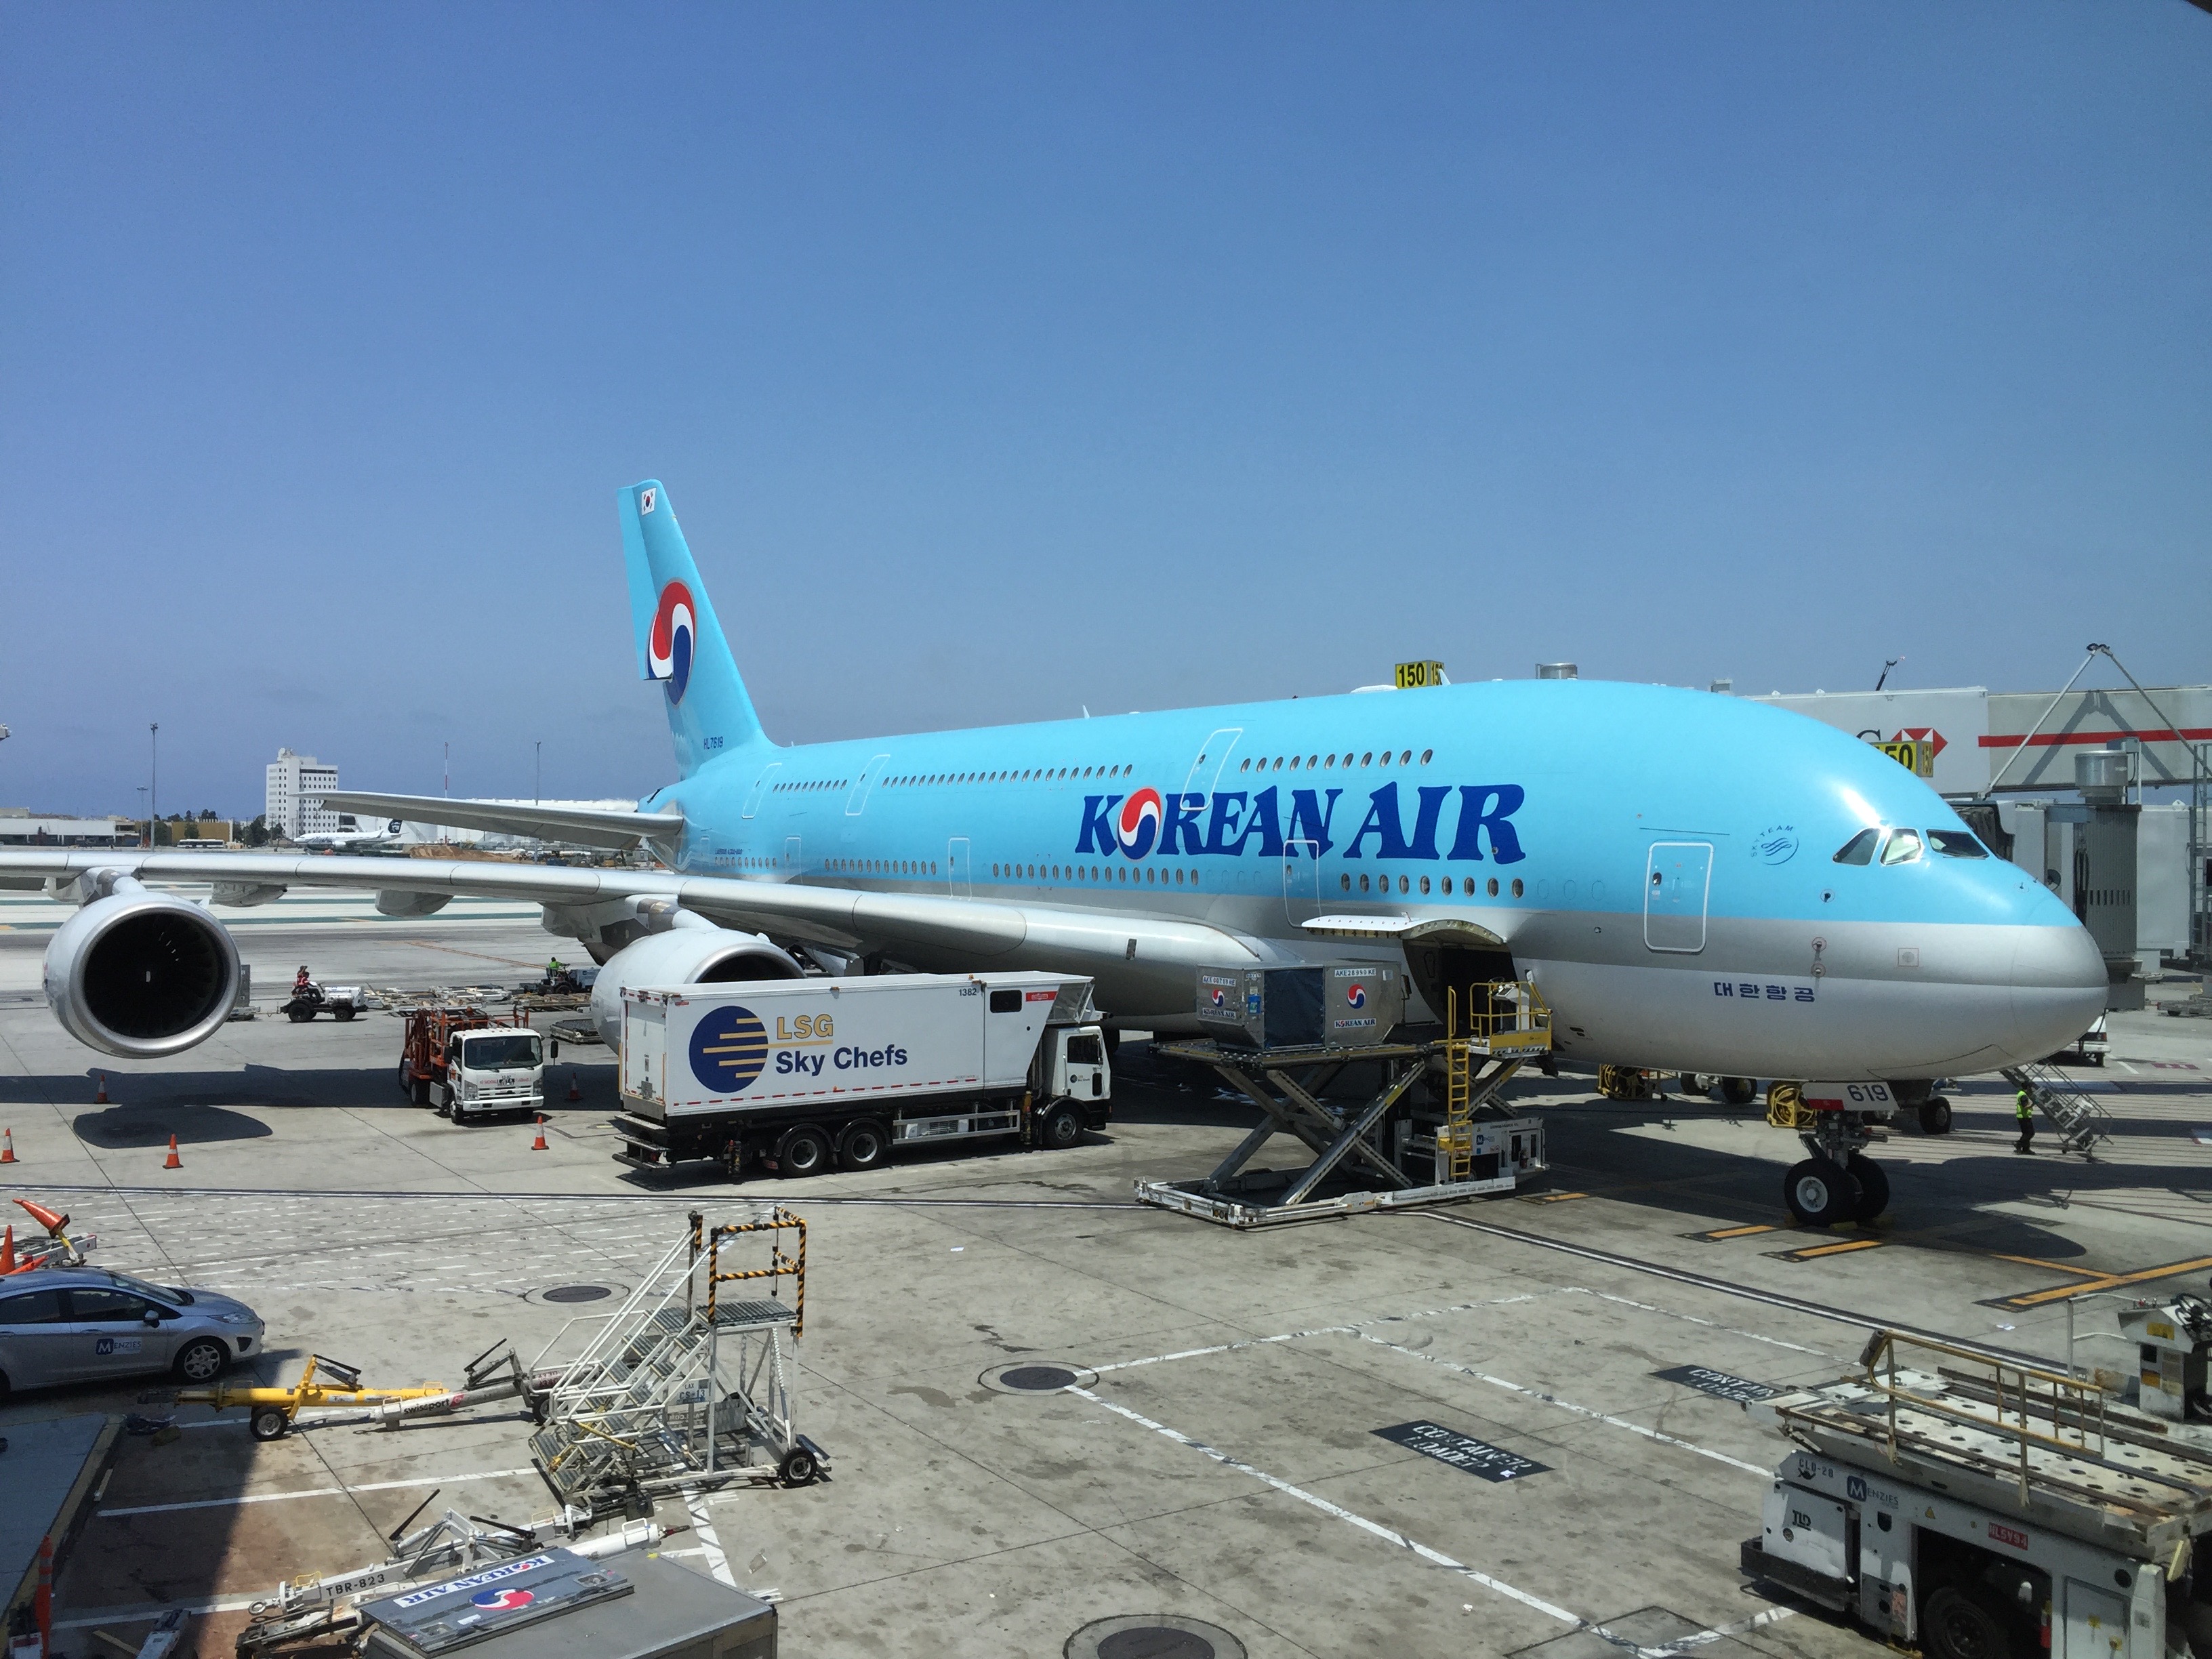 Trip Review: Korean Air Business Class on the A380 Upper ...